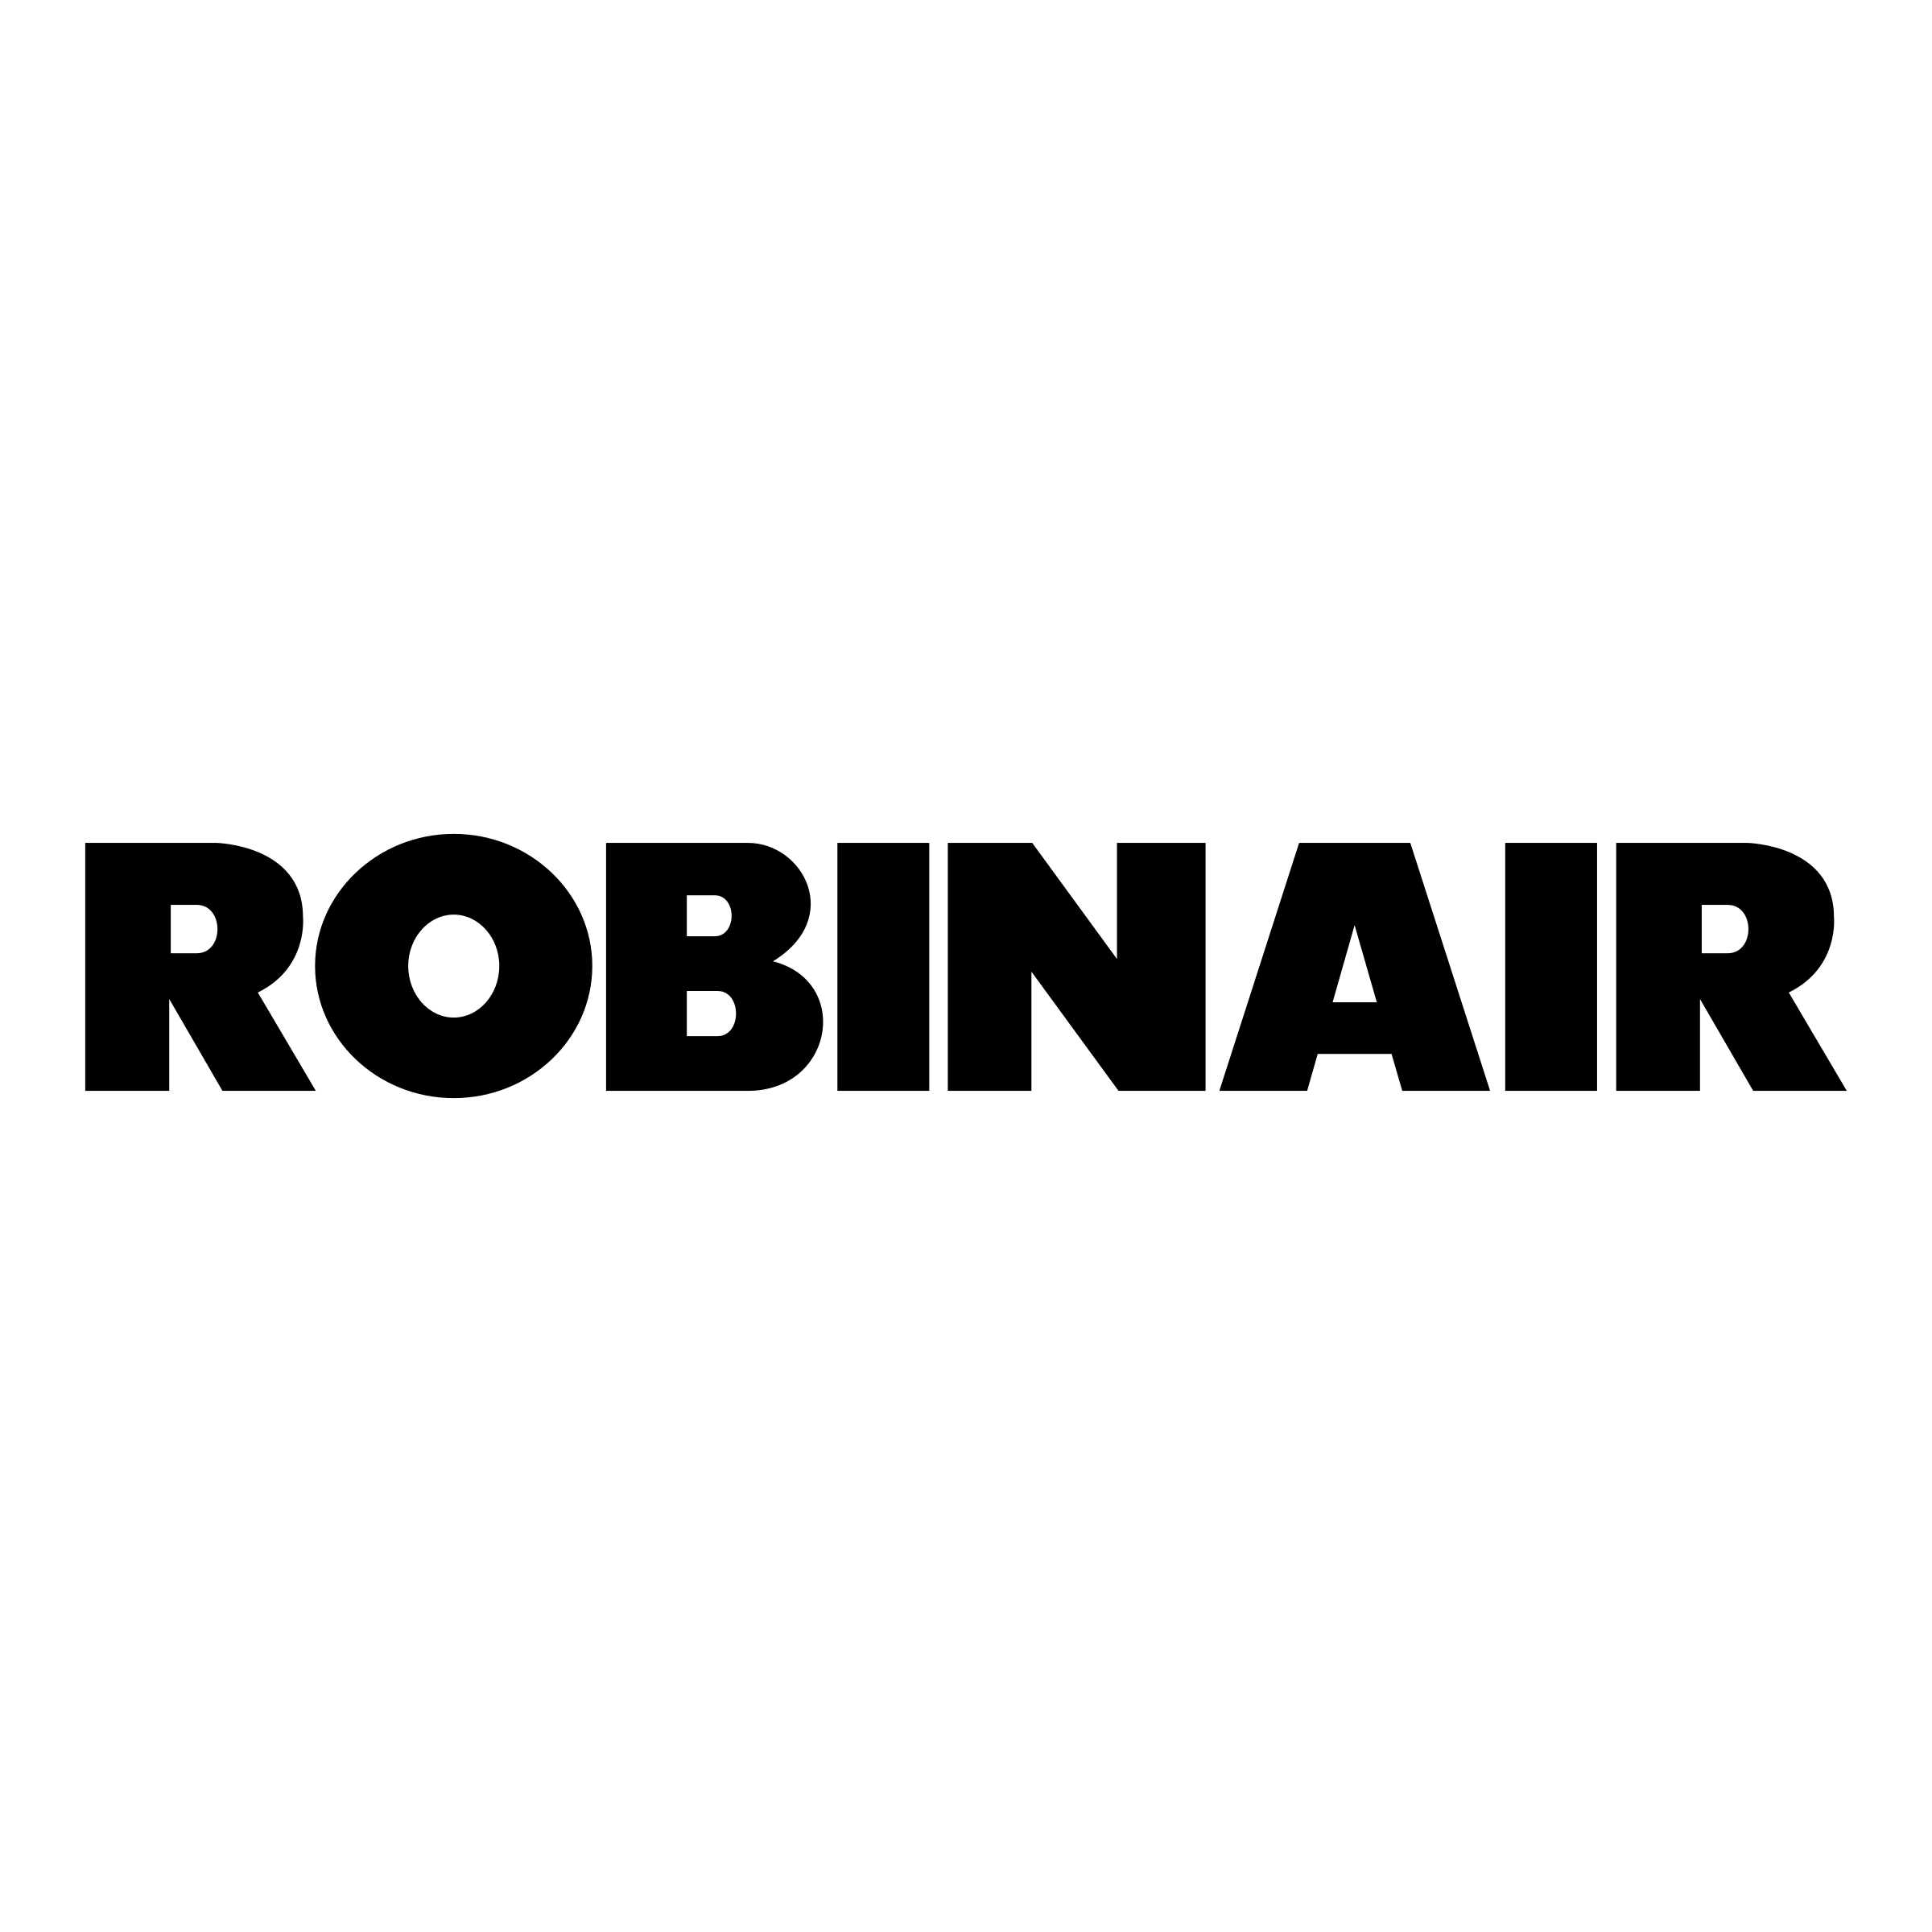 Robinair Logo - Robinair Logo PNG Transparent & SVG Vector - Freebie Supply